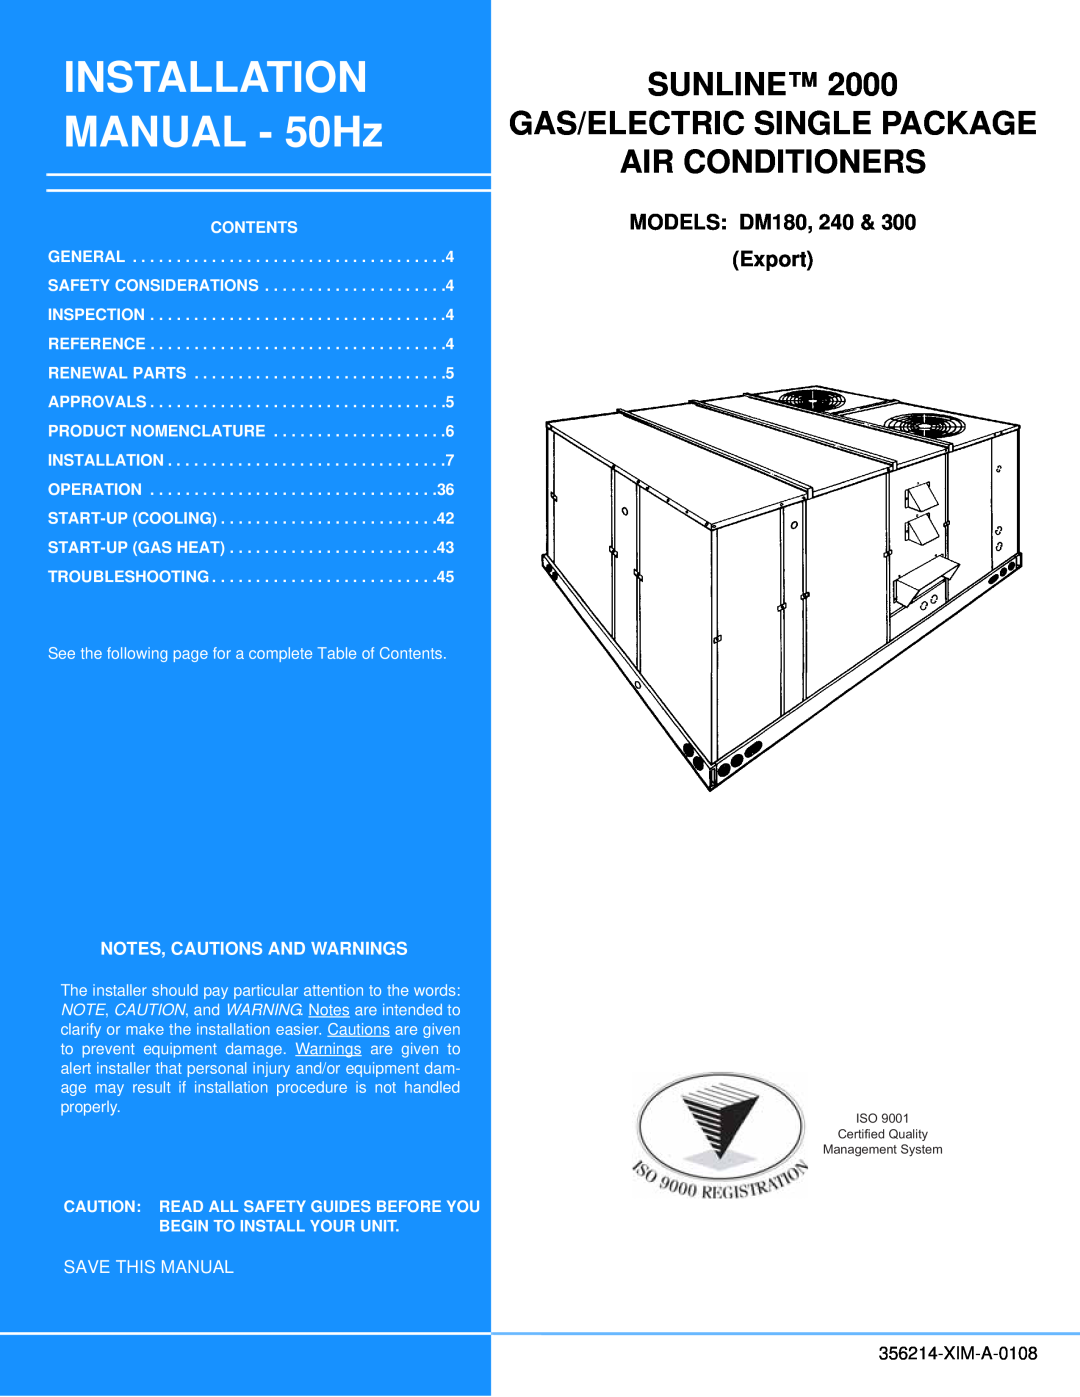 Sunlife Enterprises DM240 installation manual MODELS DM180, 240 & Export, INSTALLATION MANUAL - 50Hz, Air Conditioners 